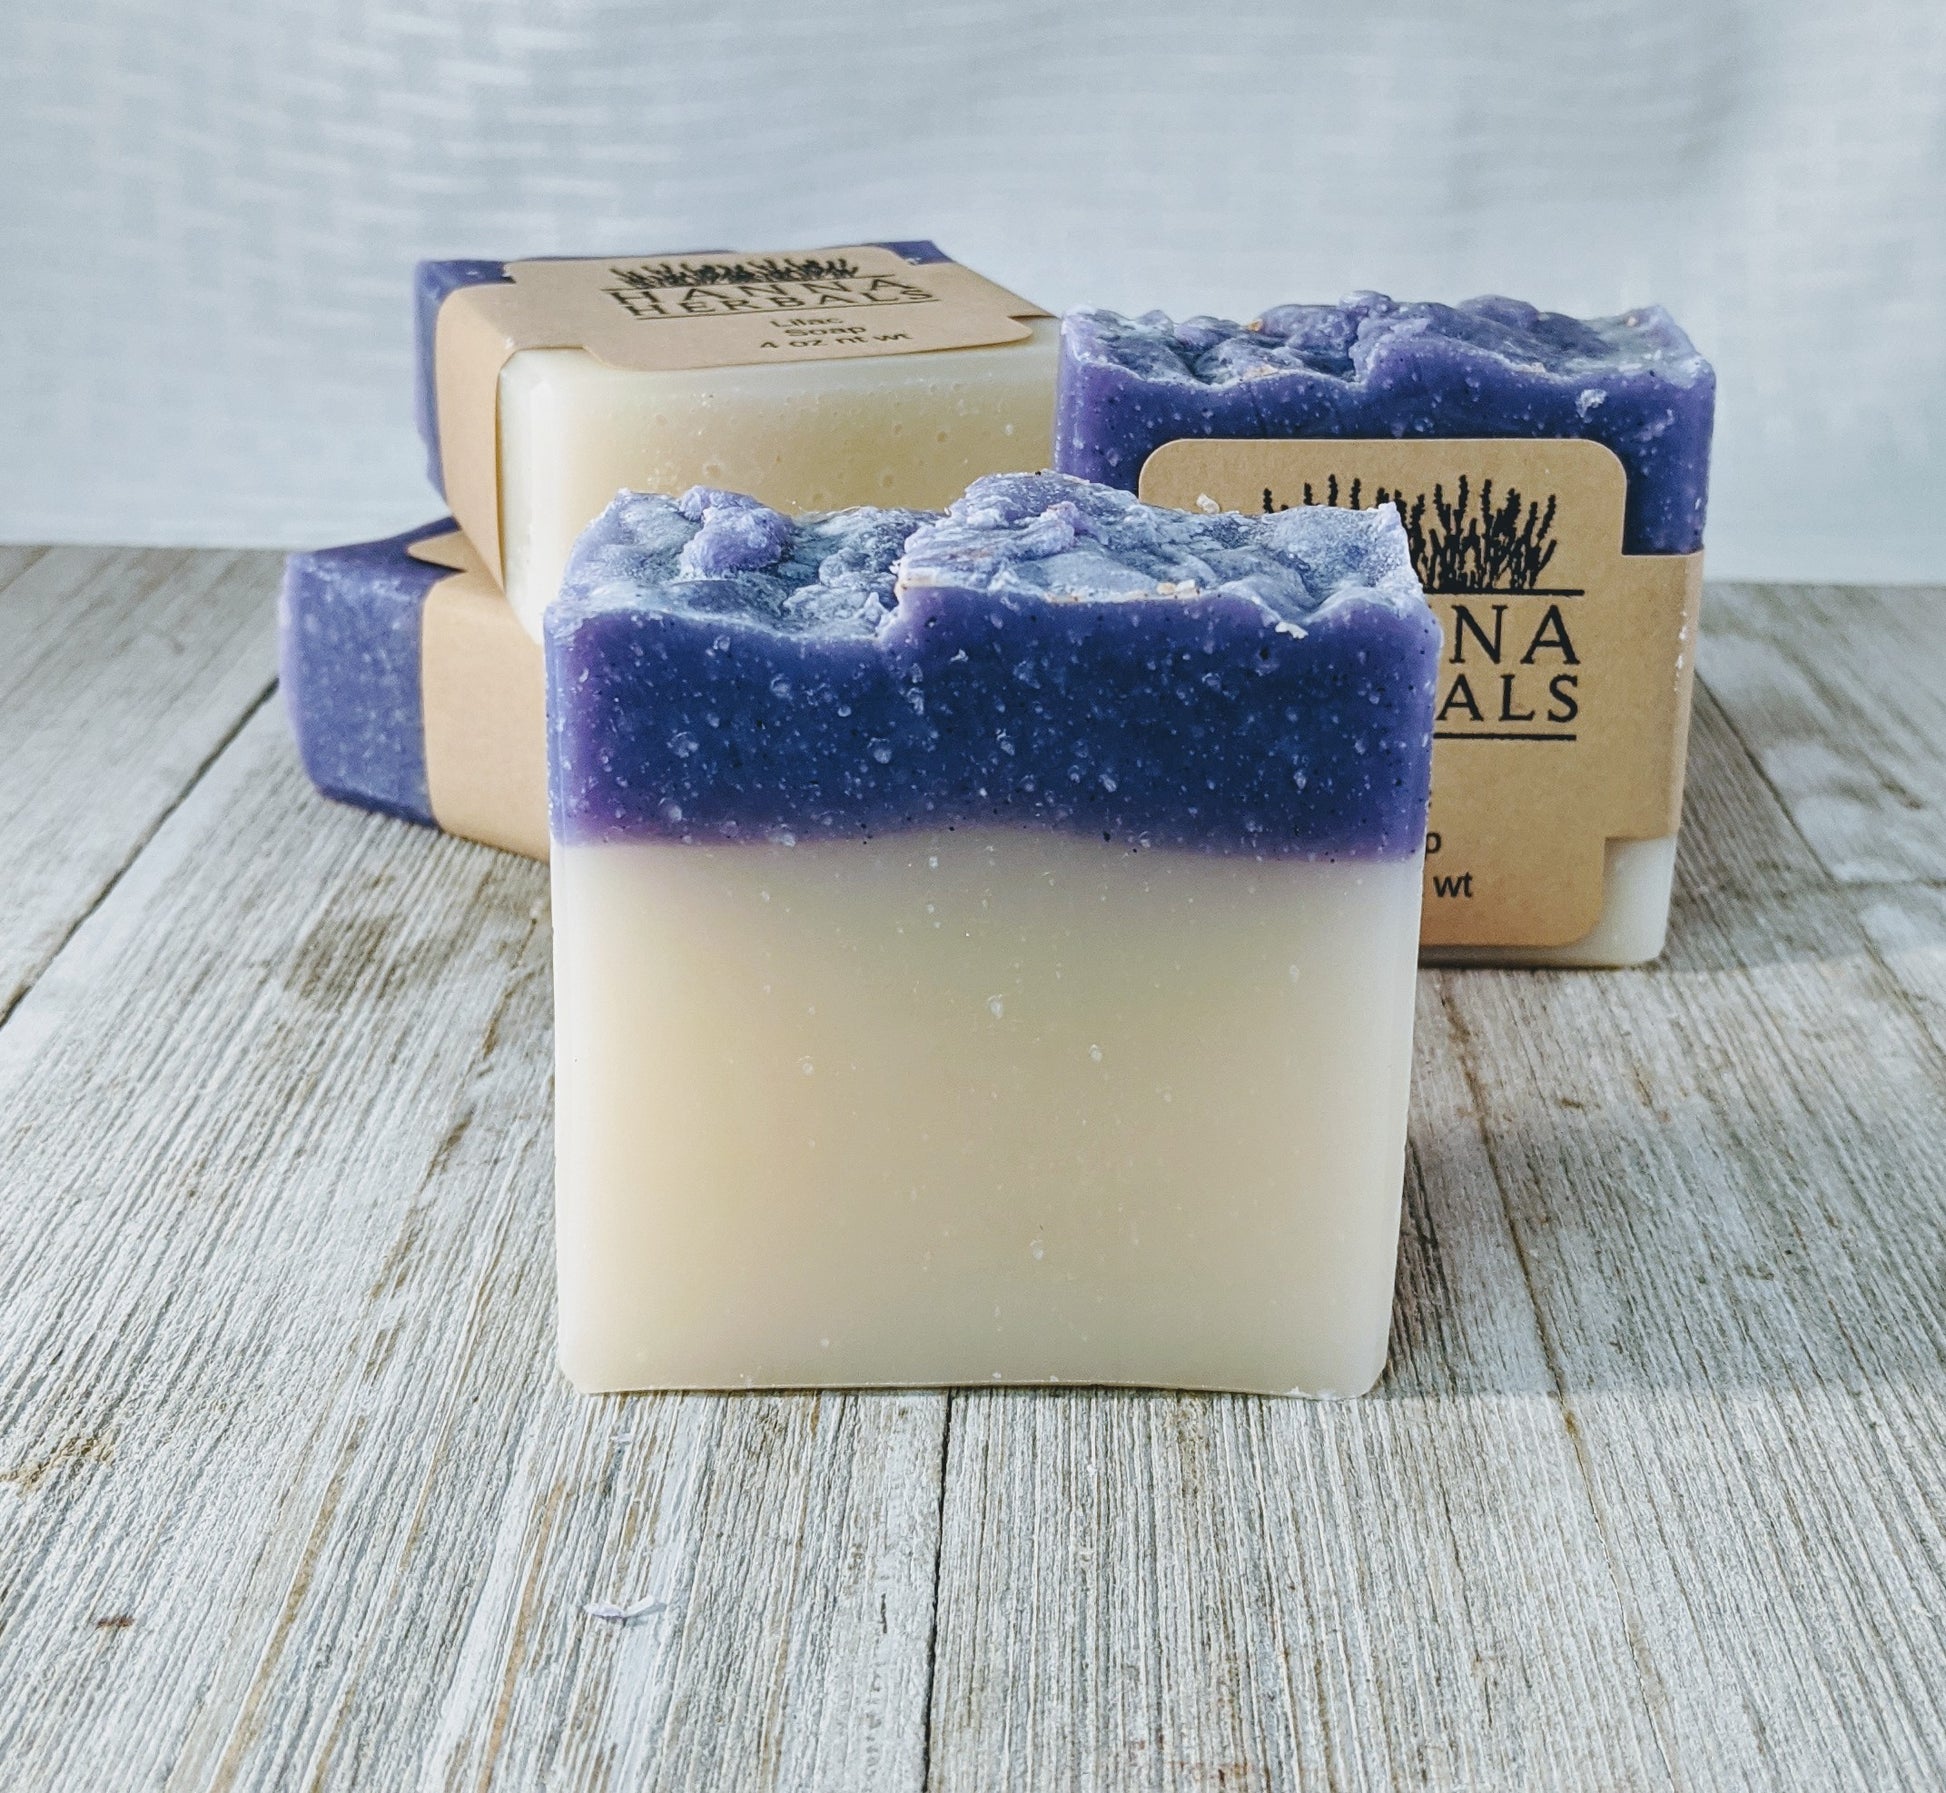 Lilac Soap - Hanna Herbals